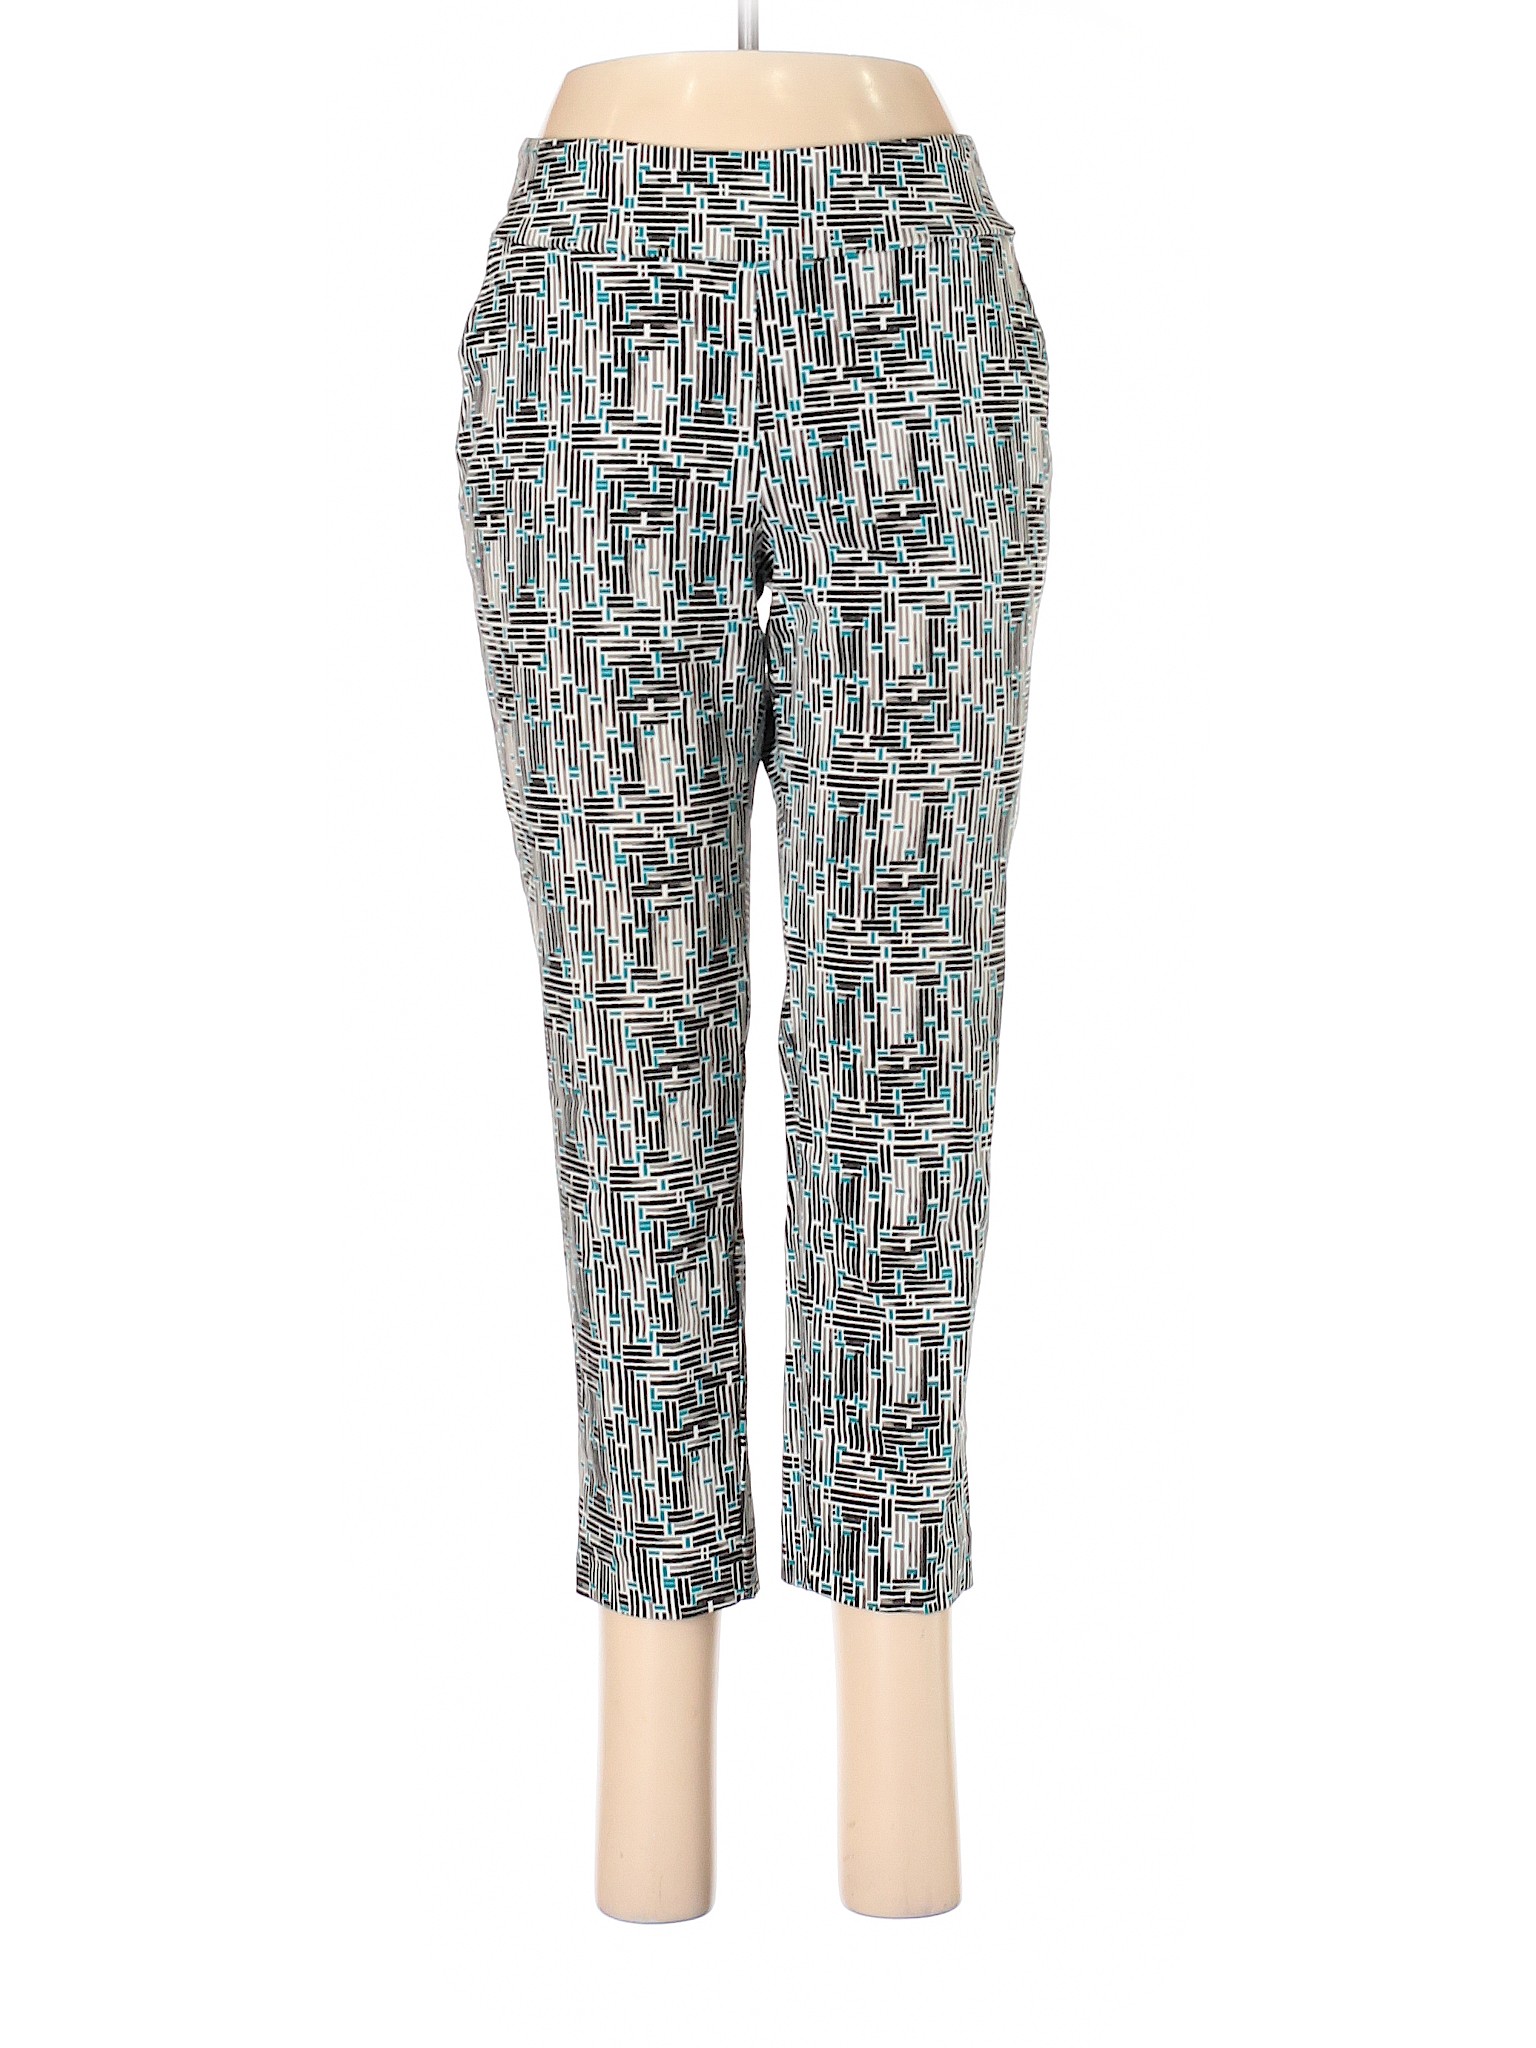 Jules & Leopold Women Brown Dress Pants M | eBay